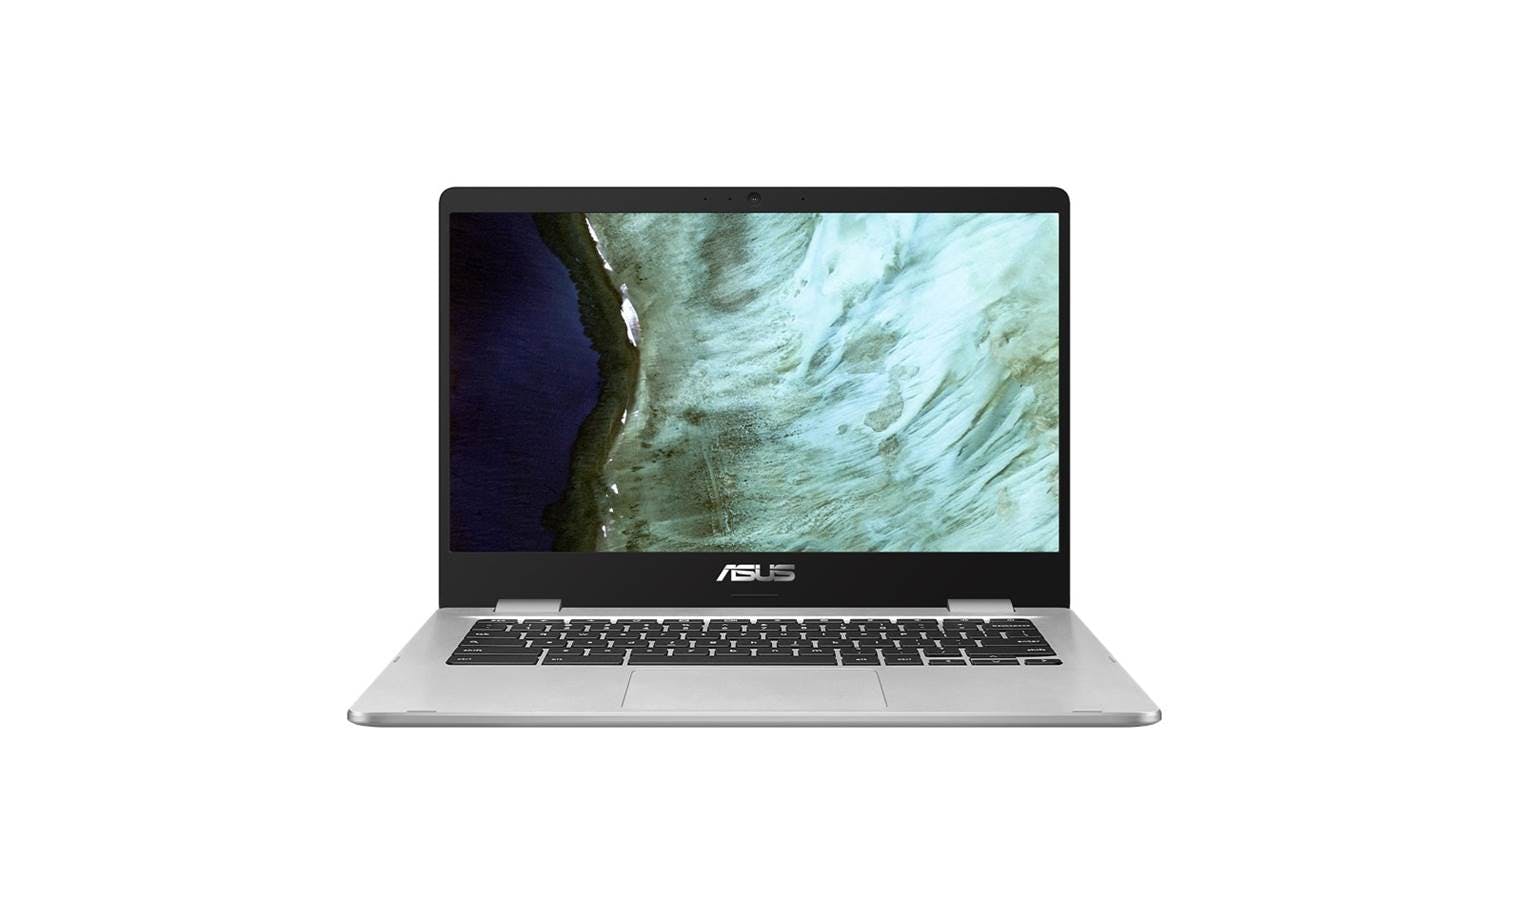 Asus Chromebook C423: Intel Pentium N4200